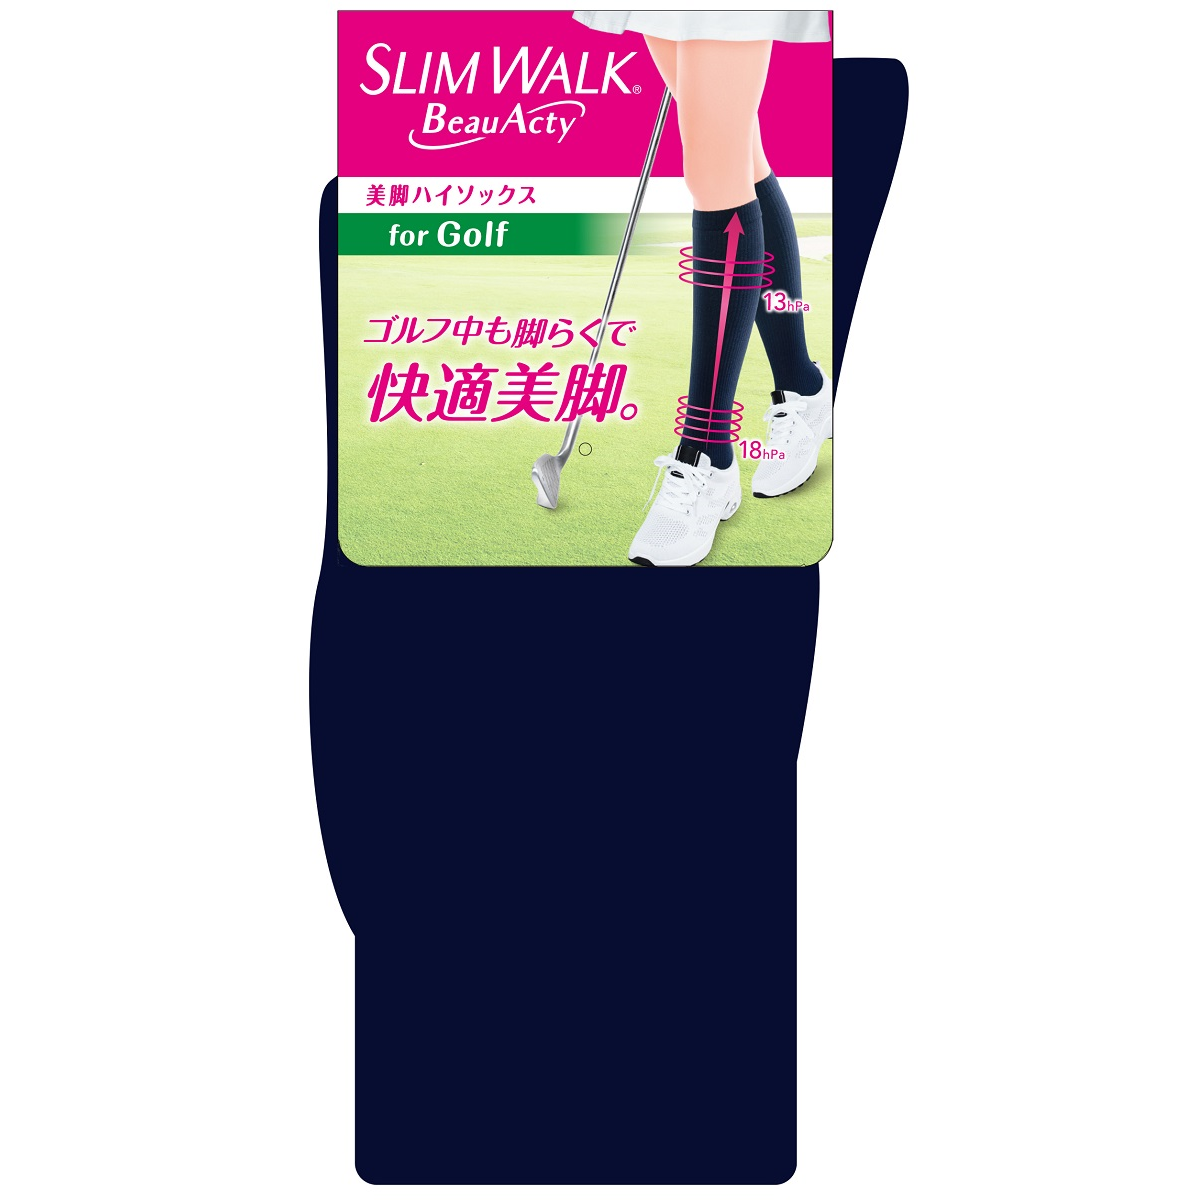 SLIMWALK BeauActy Compression Socks for Golf Navy 22-24 cm / ถุงเท้ากระชับเรียวขา 1 คู่ (สีน้ำเงิน)